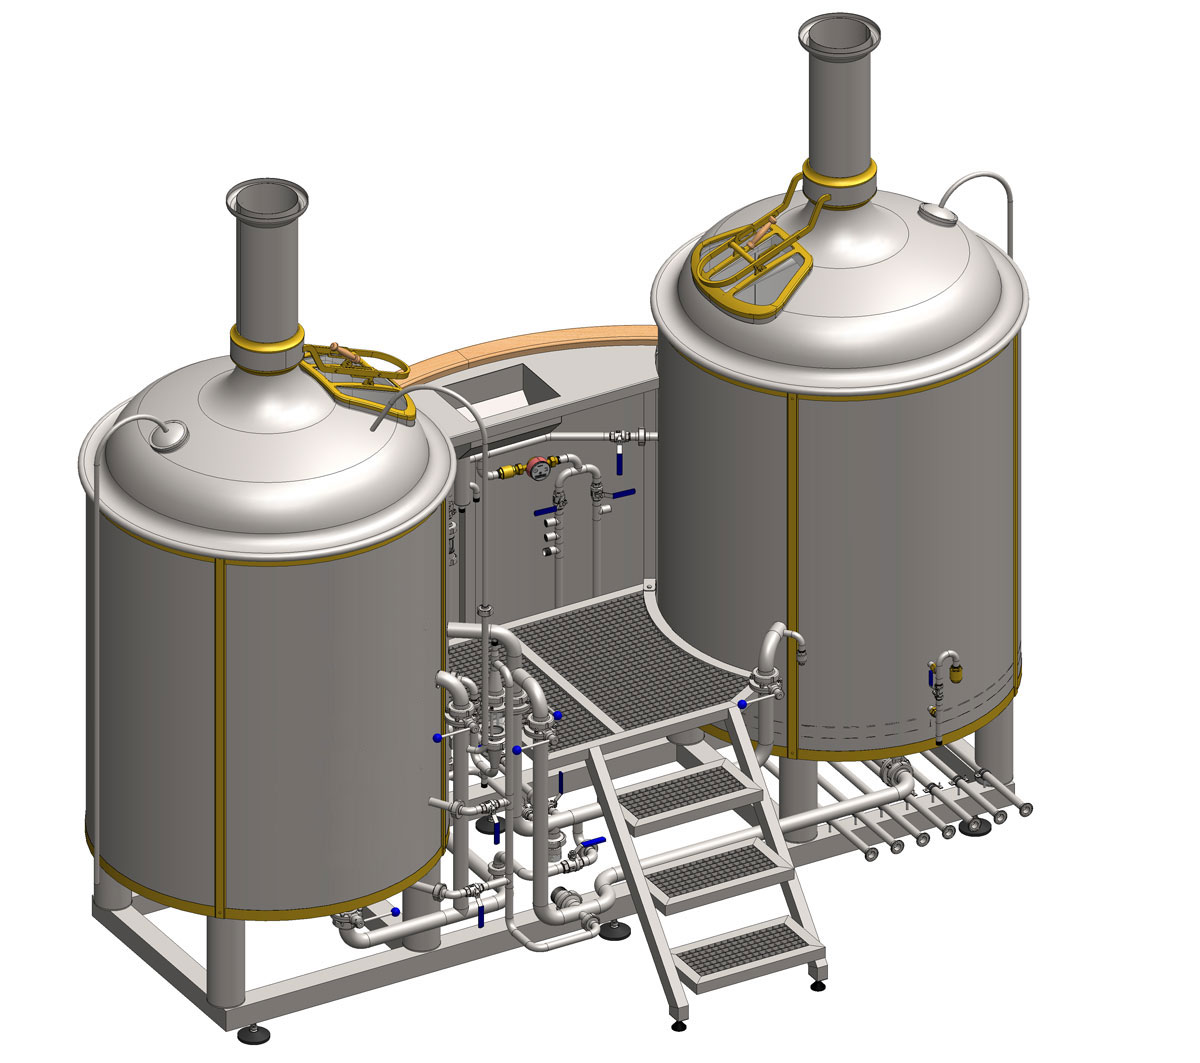 MODULO LITE-ME 500 : Wort brew machine - the simplified modular brewhouse